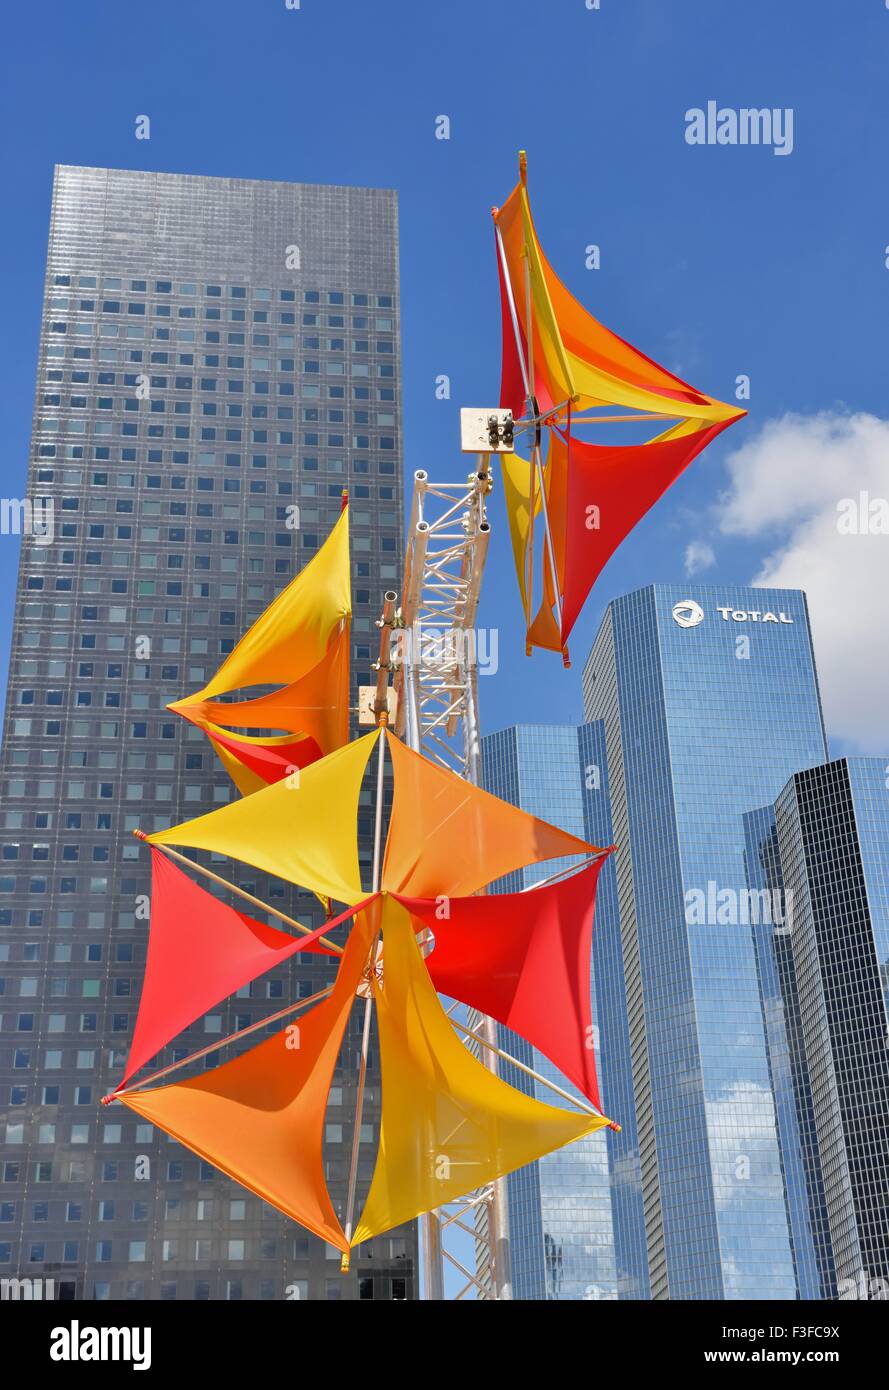 Colorful windmills, modern artwork on Voie des Sculptures, modern office buildings behind, La Defense, Nanterre, Paris Stock Photo